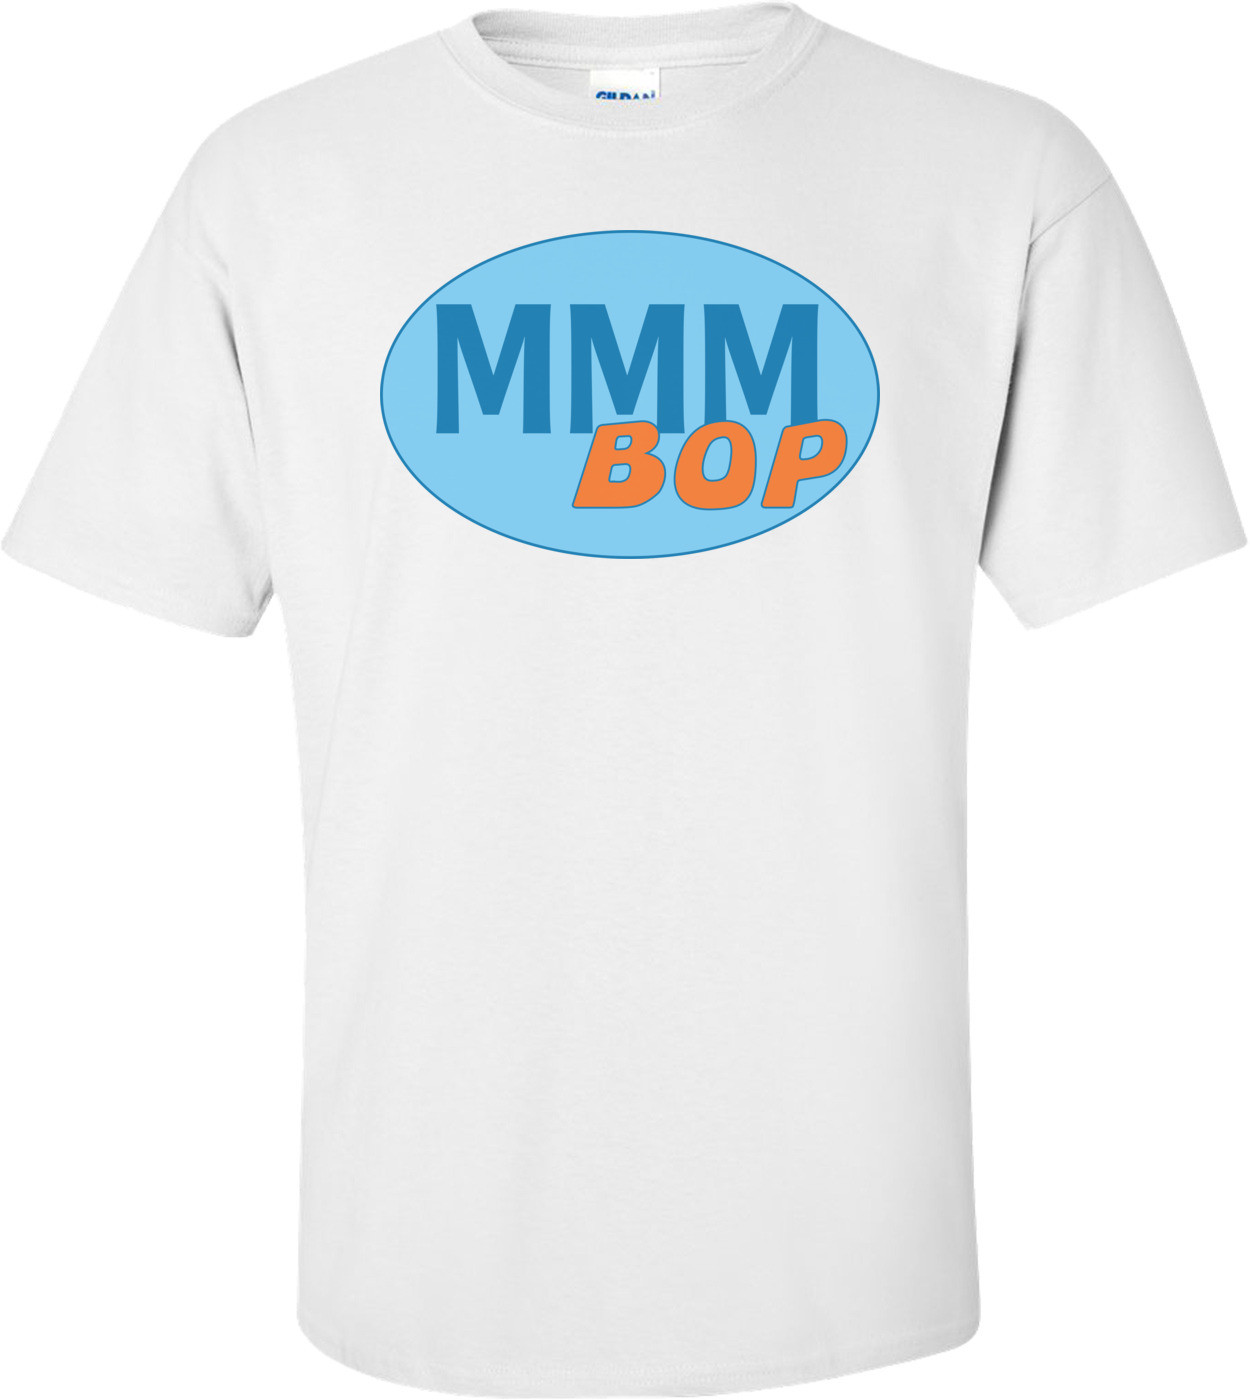 Mmm Bop - Hanson  T-shirt